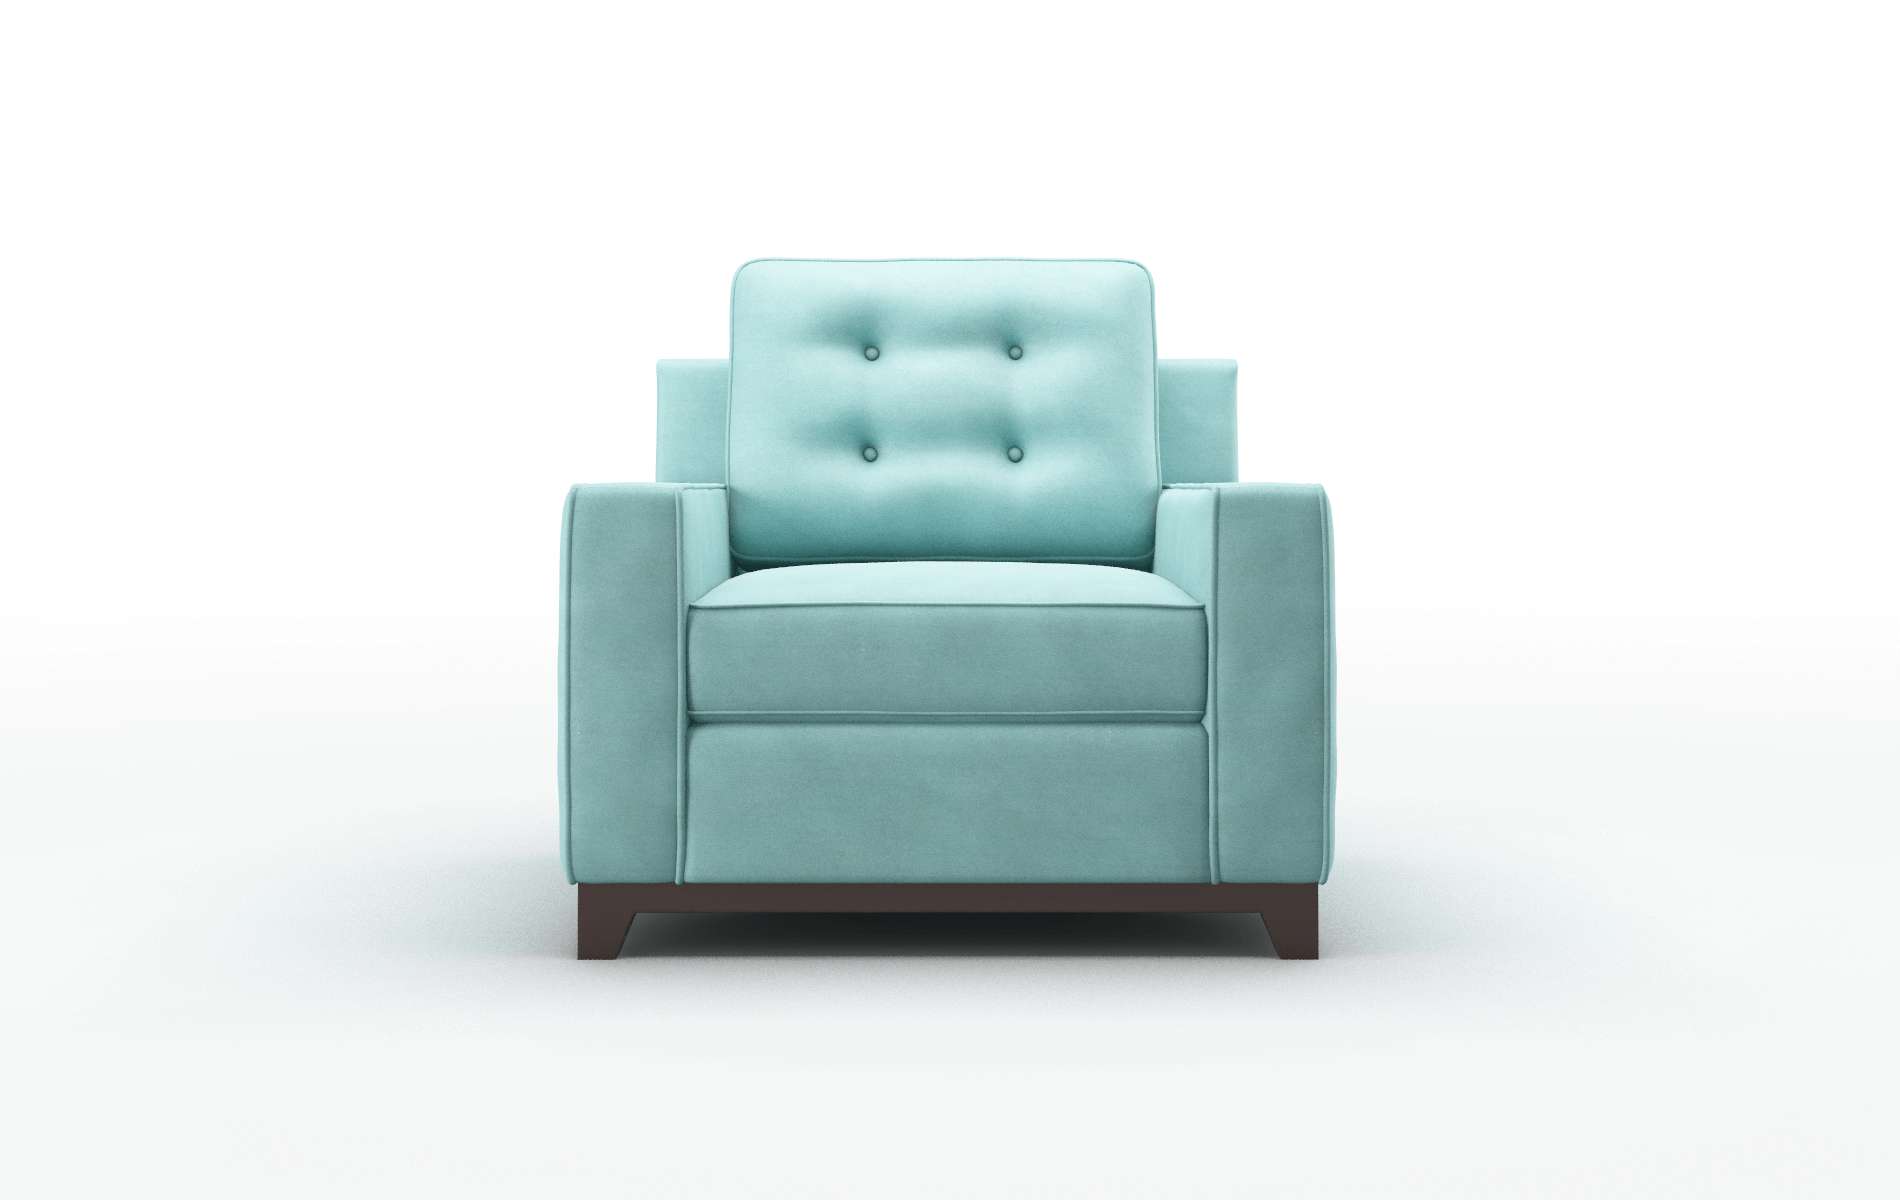 Alexandria Curious Turquoise chair espresso legs